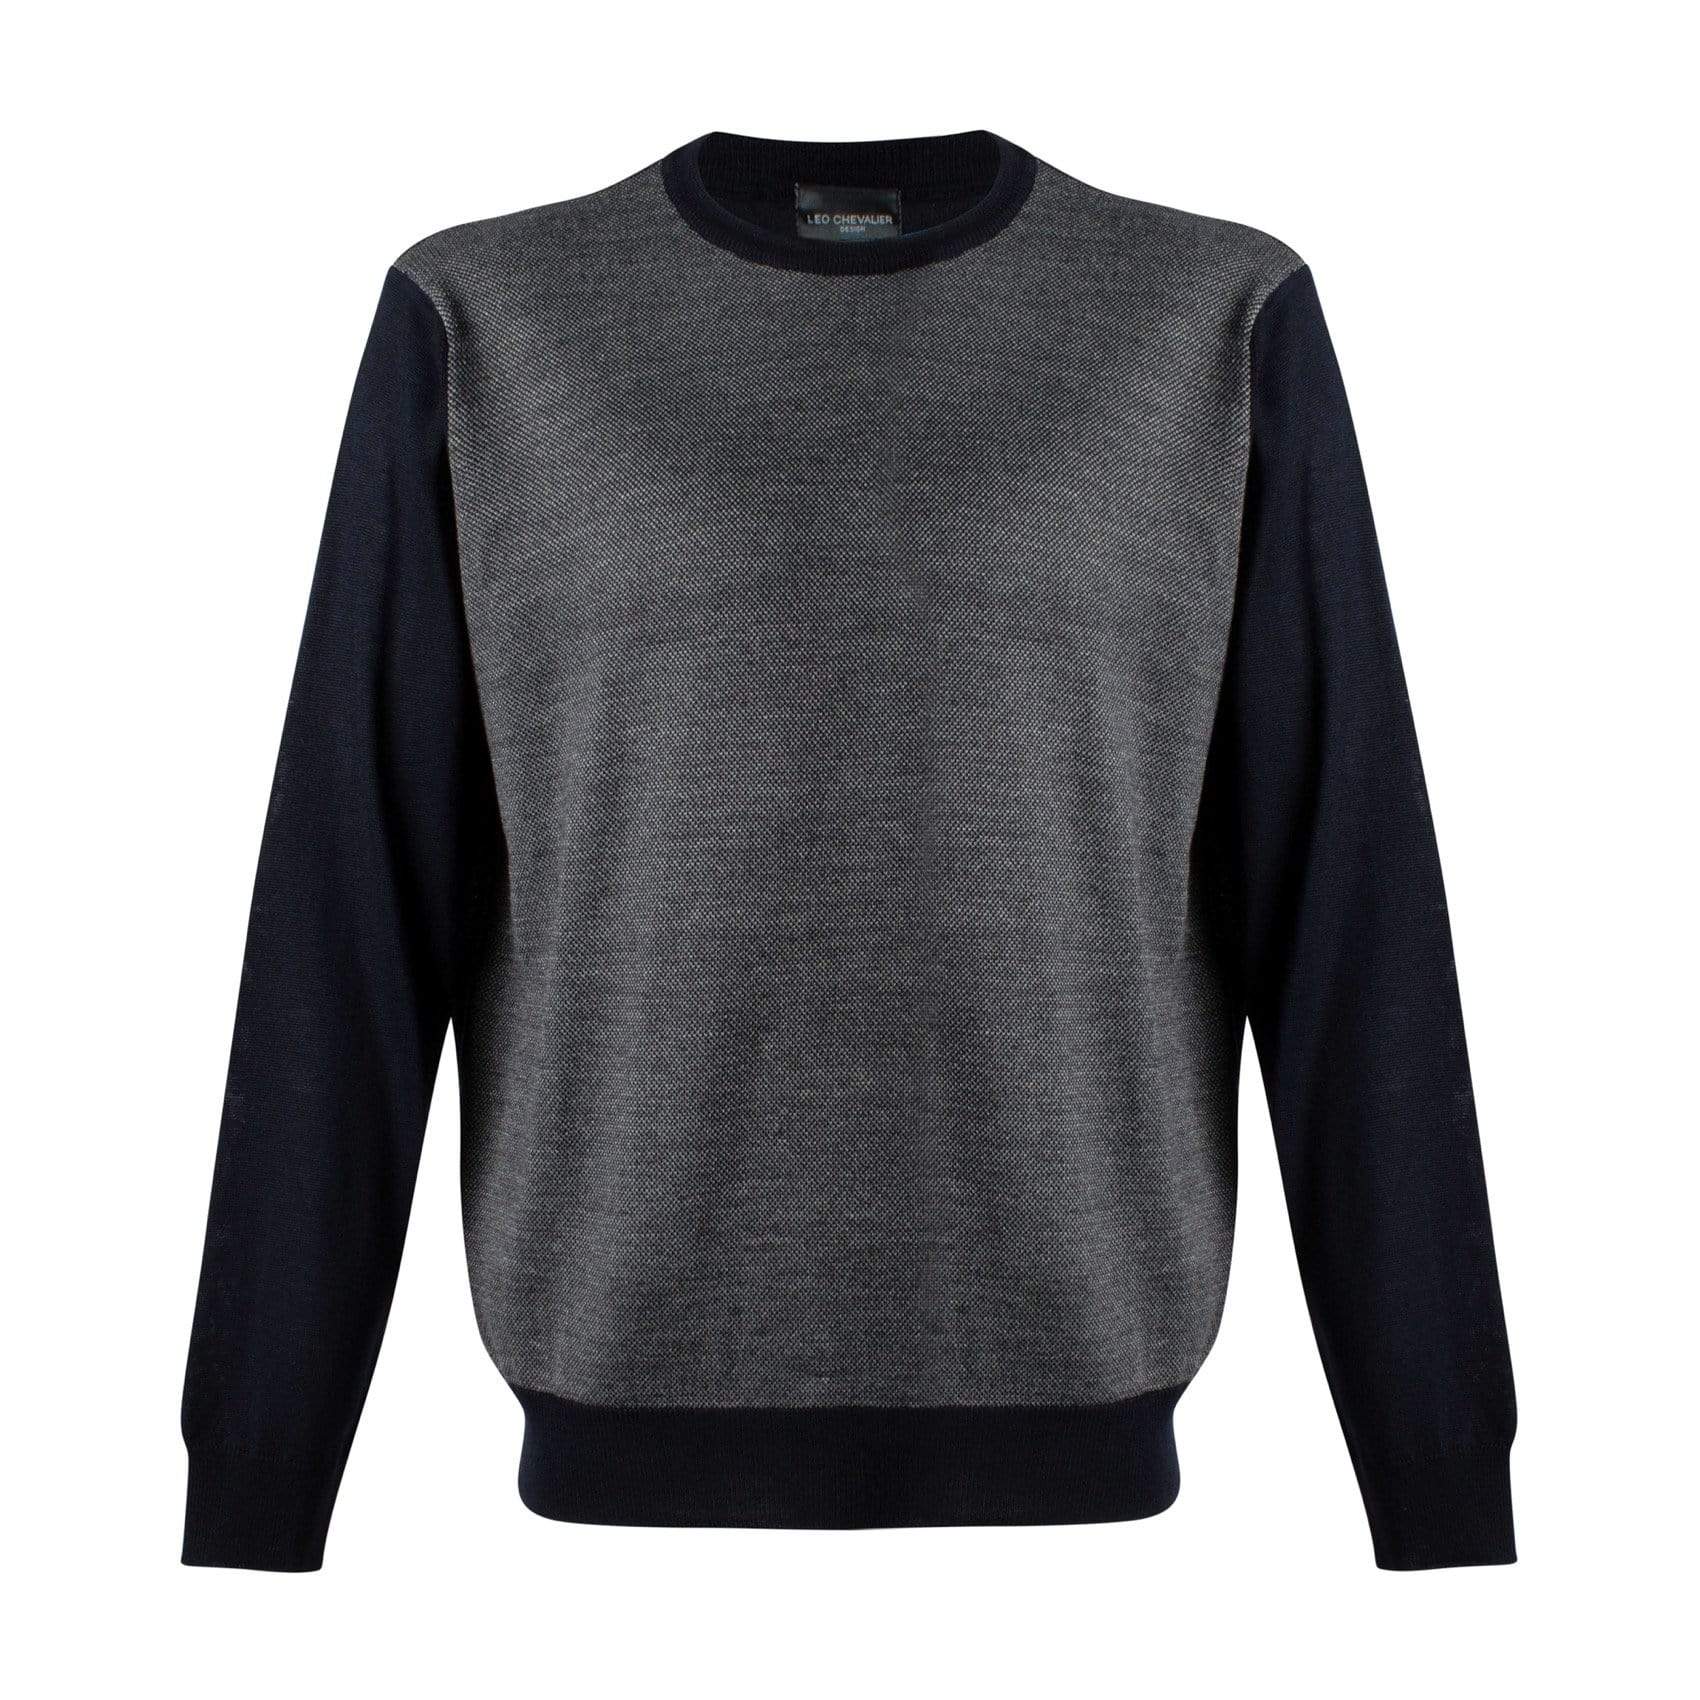 Leo Chevalier Design Stay Stylish and Cozy with Navy Birdseye Knit Crewneck Sweaters